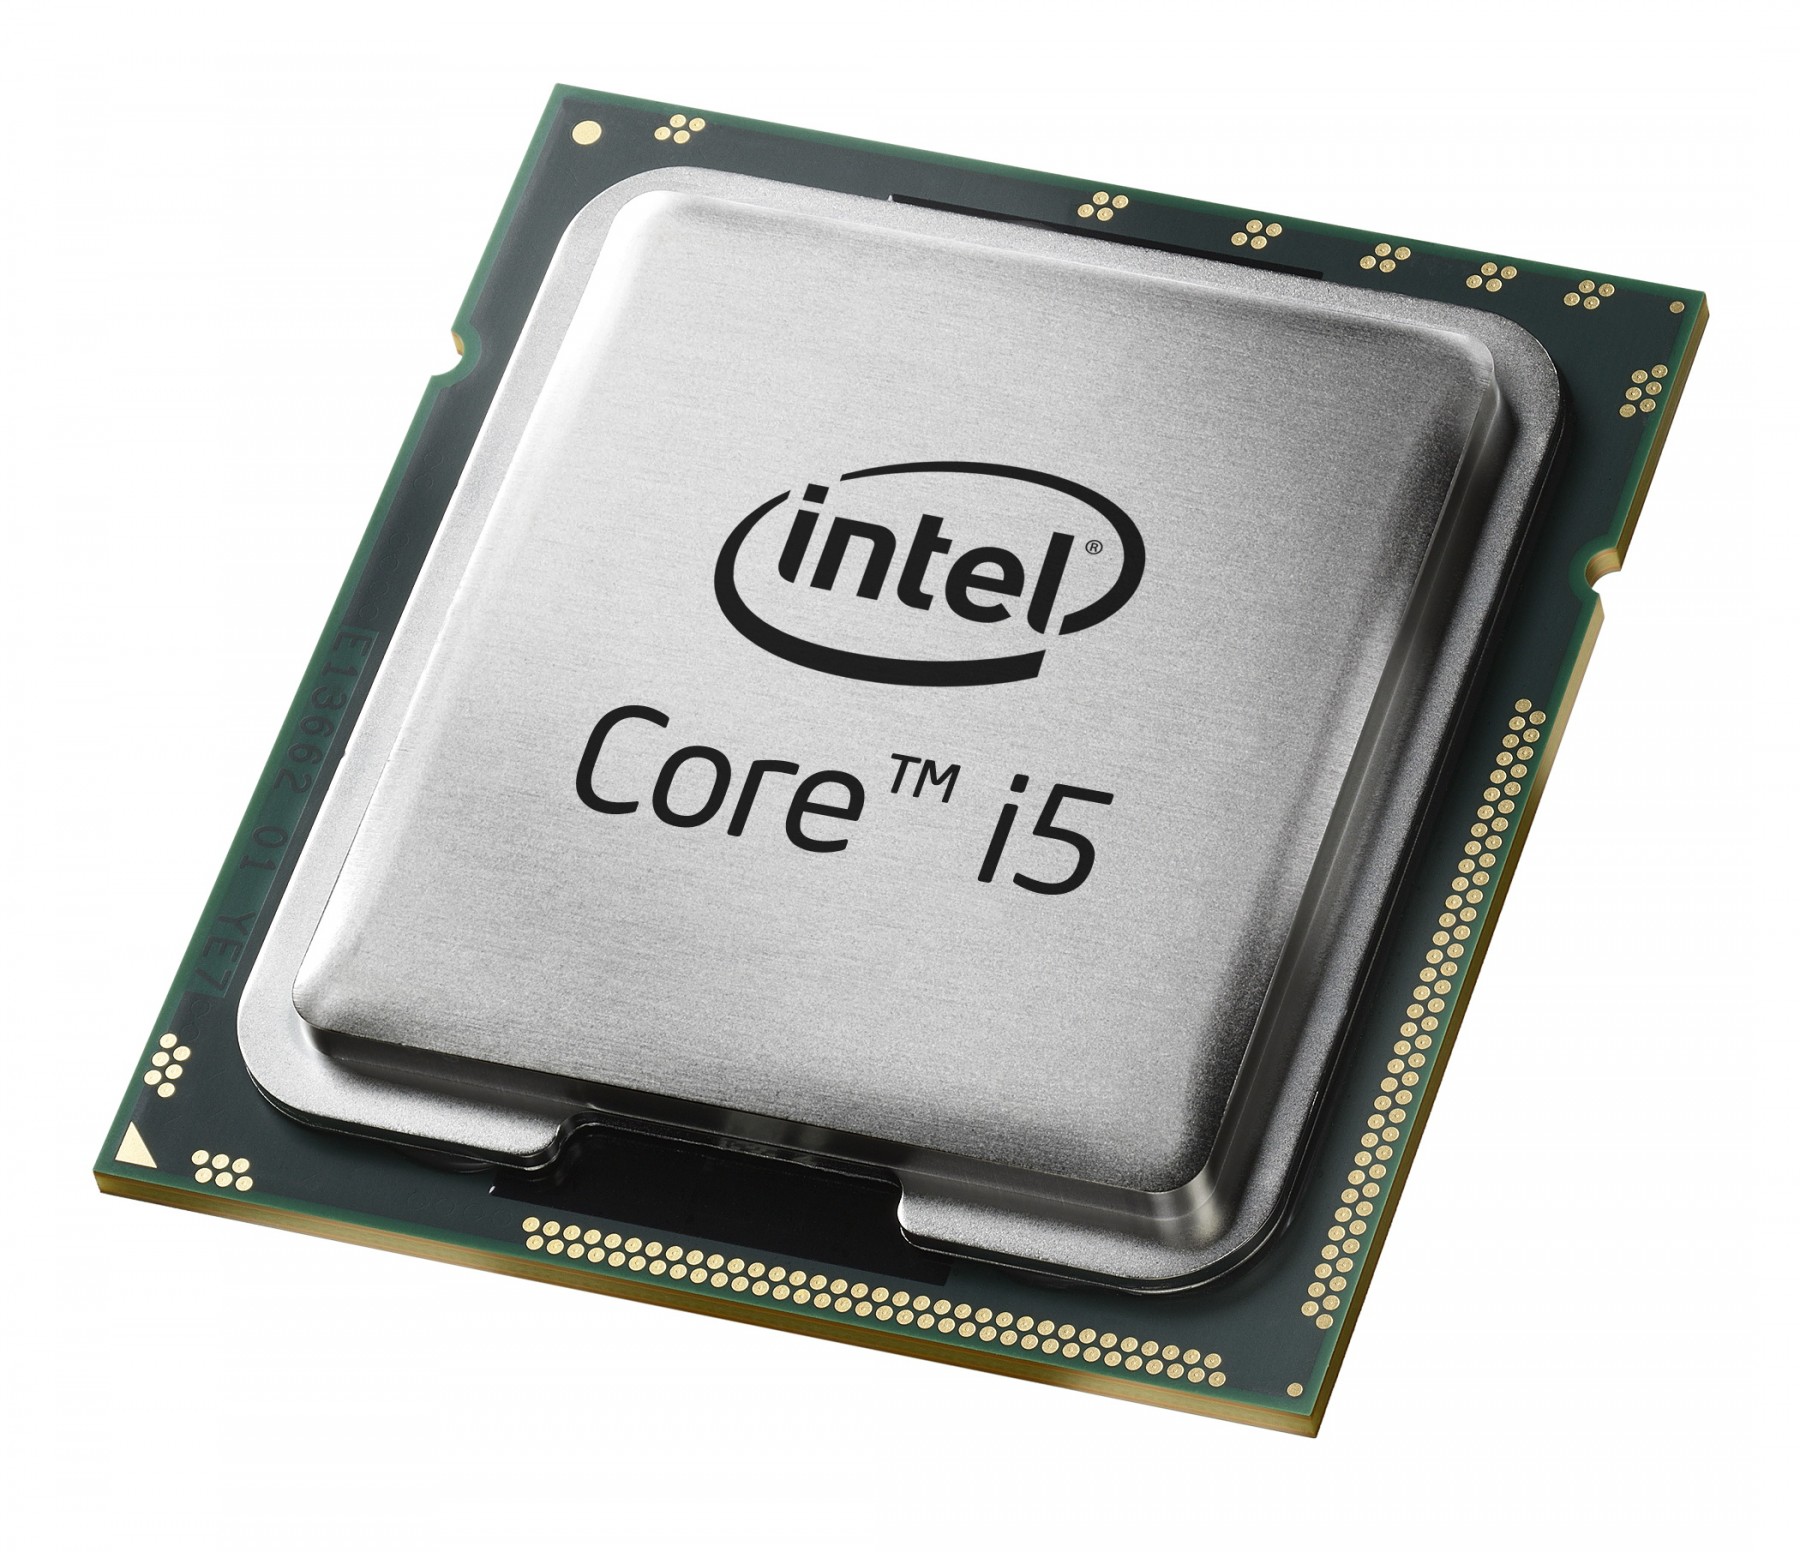 500030104-Intel Core i5-520M SLBU4 2.4Ghz 2.5GT/s BGA 1288 Processor-image